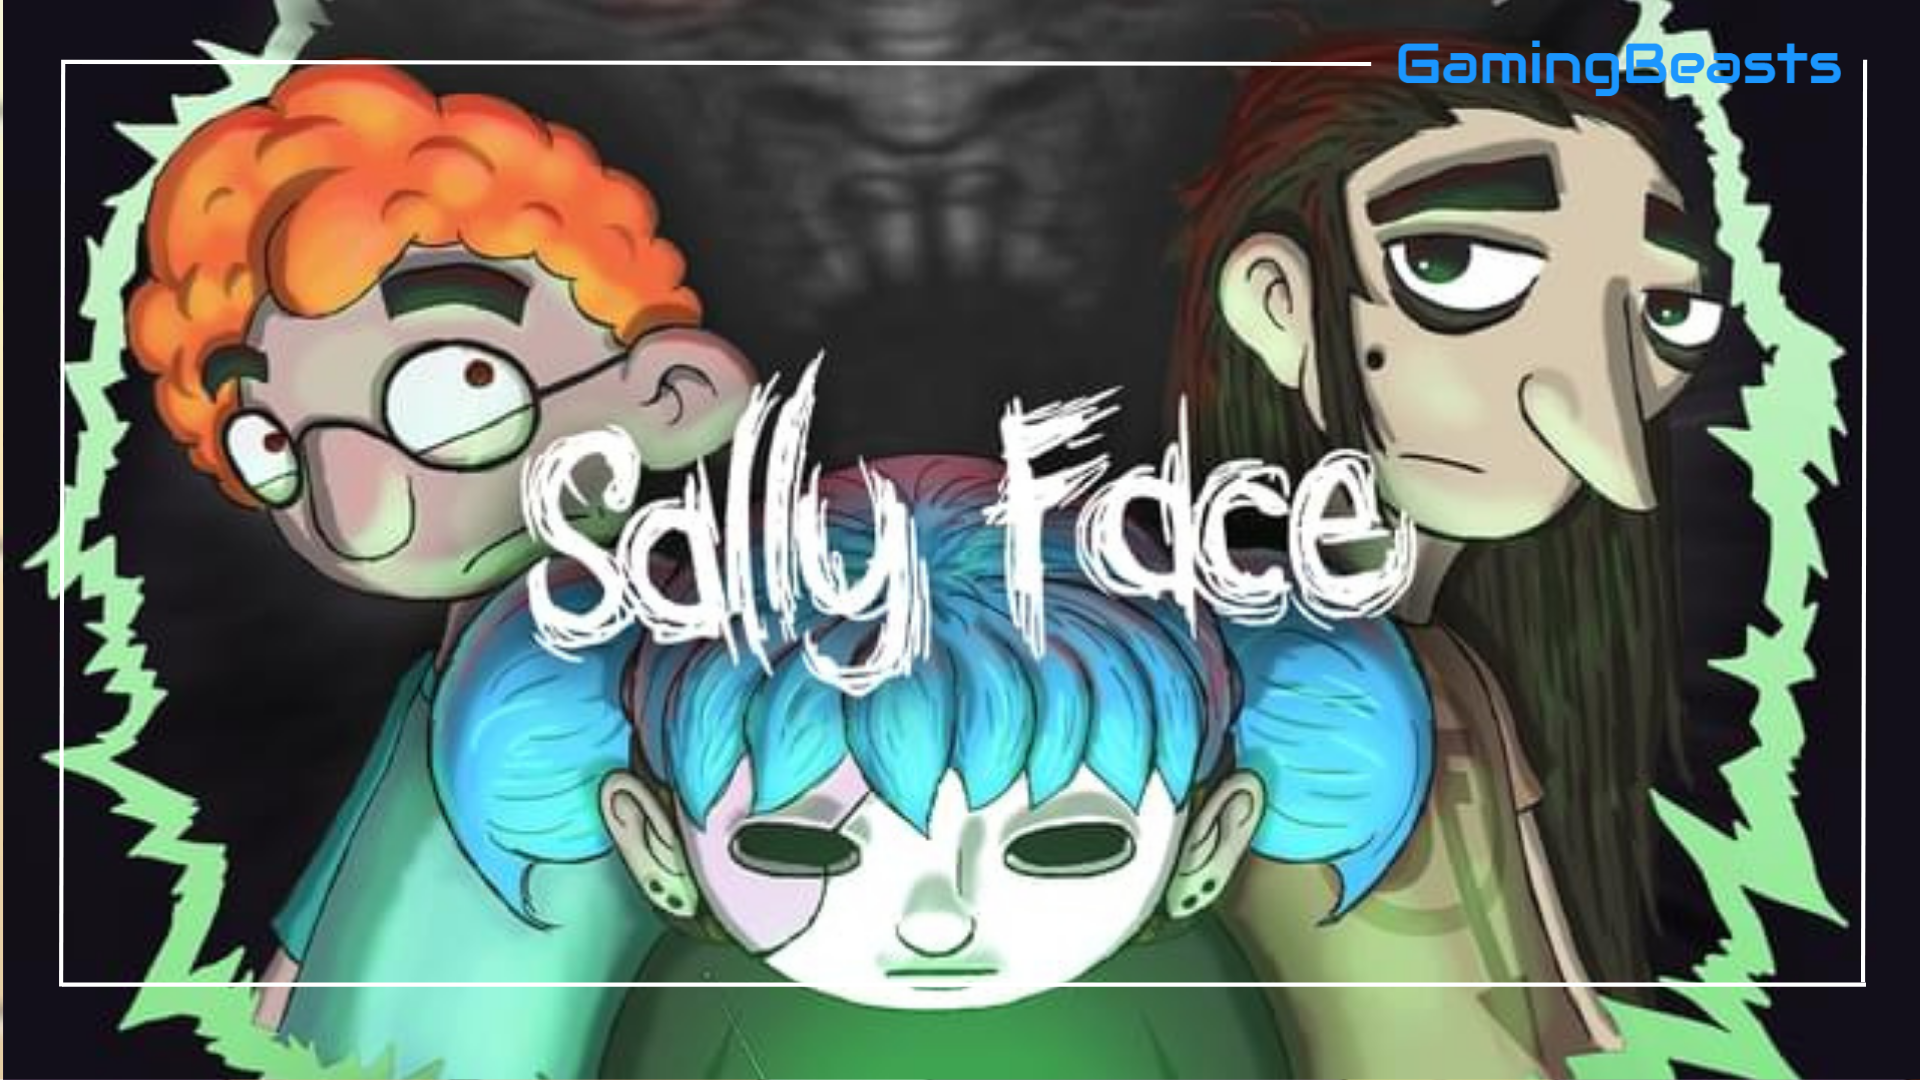 Sally face 3 эпизод